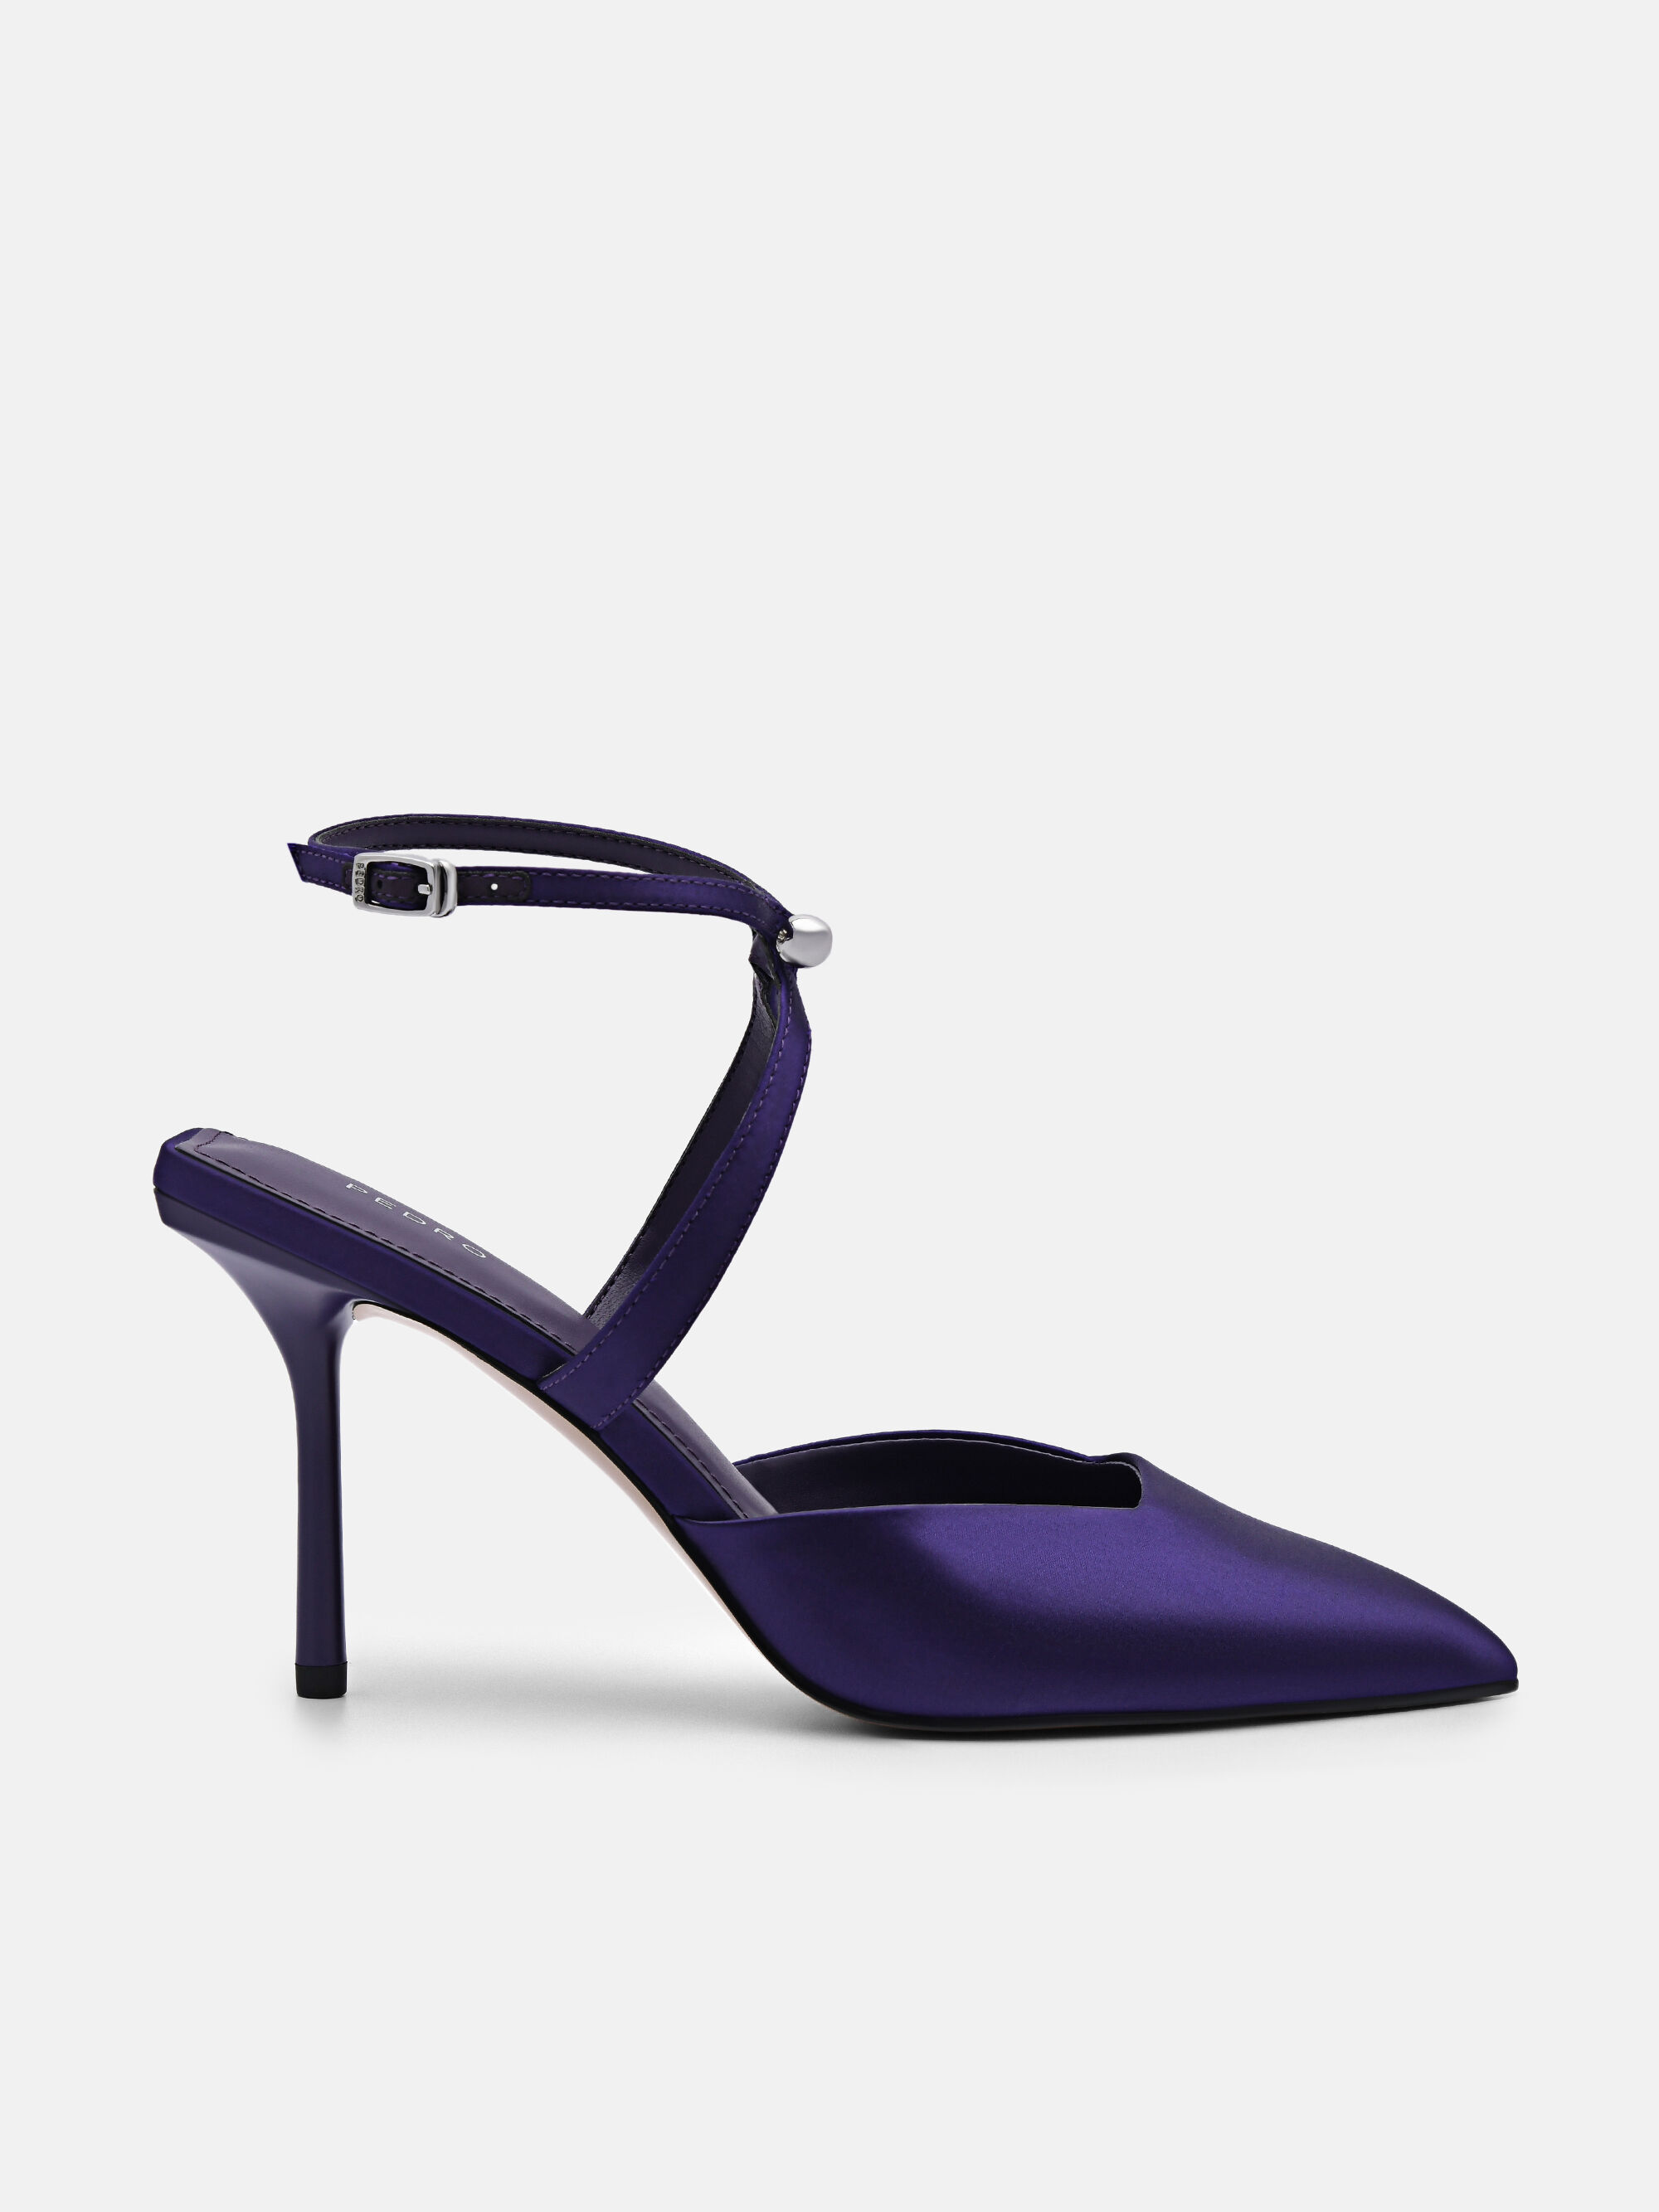 Purple High Heels | eBay